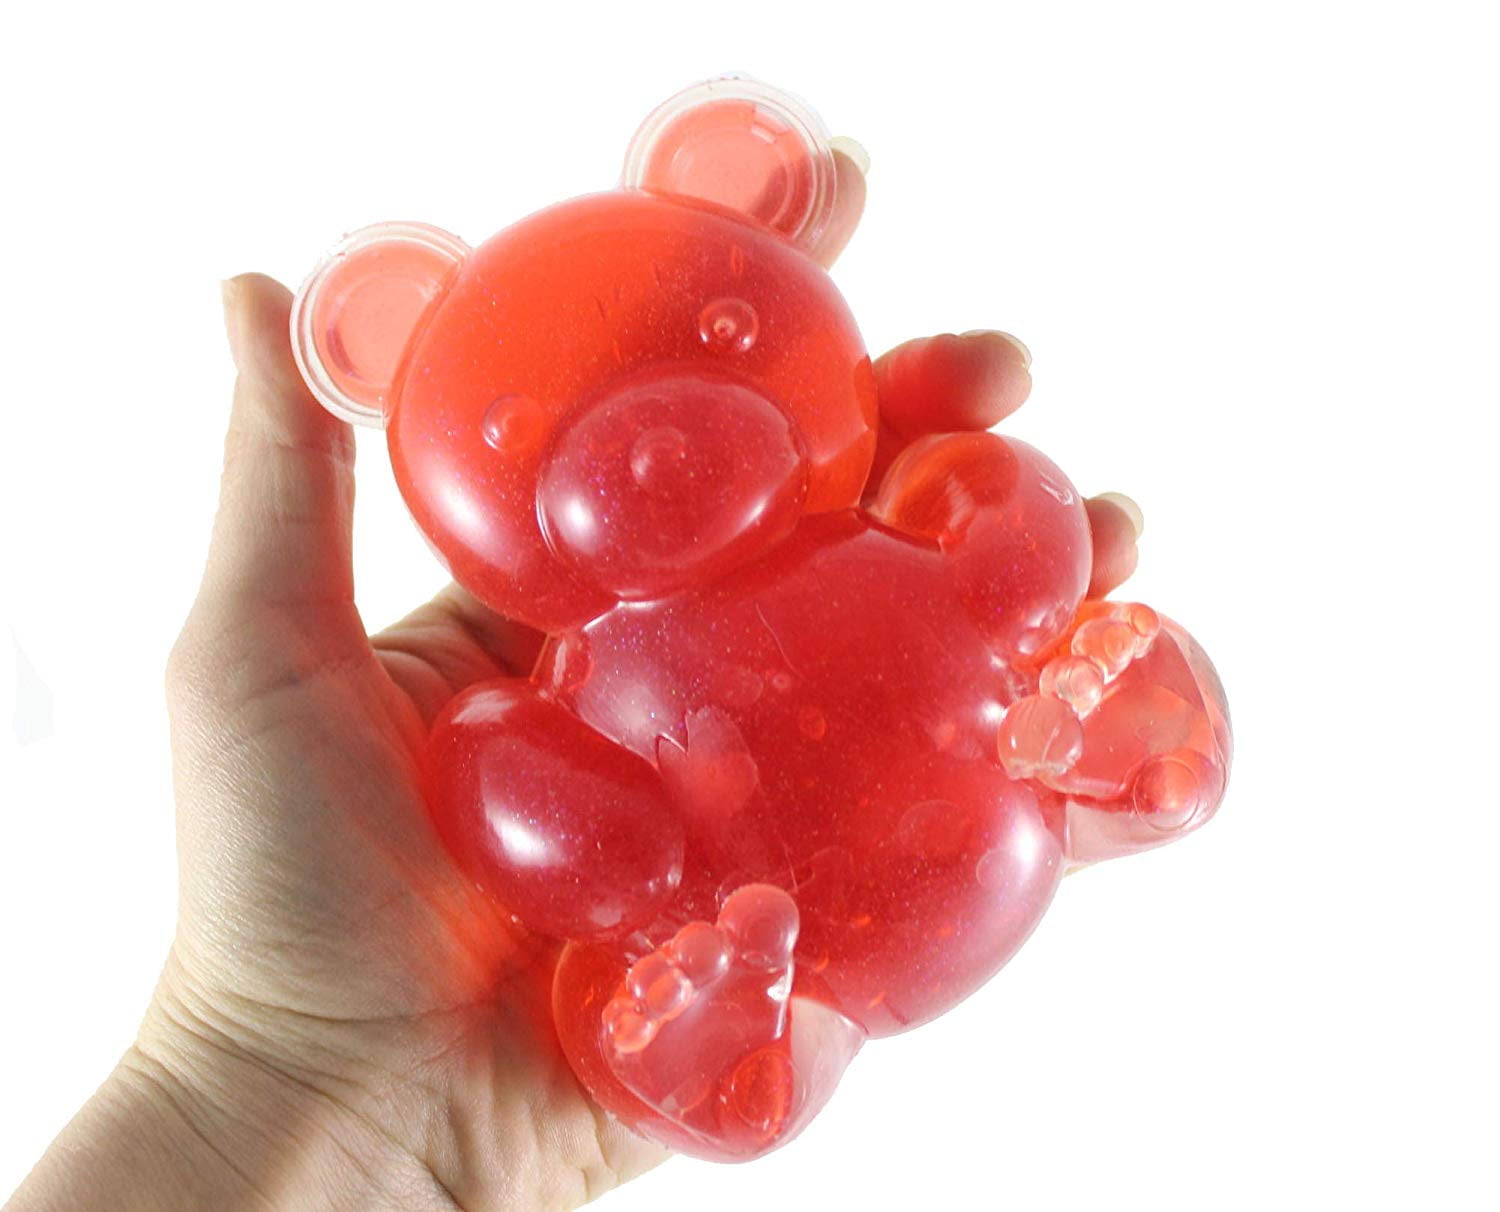 Jumbo Gummy Bear - Large Squishy Sensory Fidget Toy 1 Green Bear